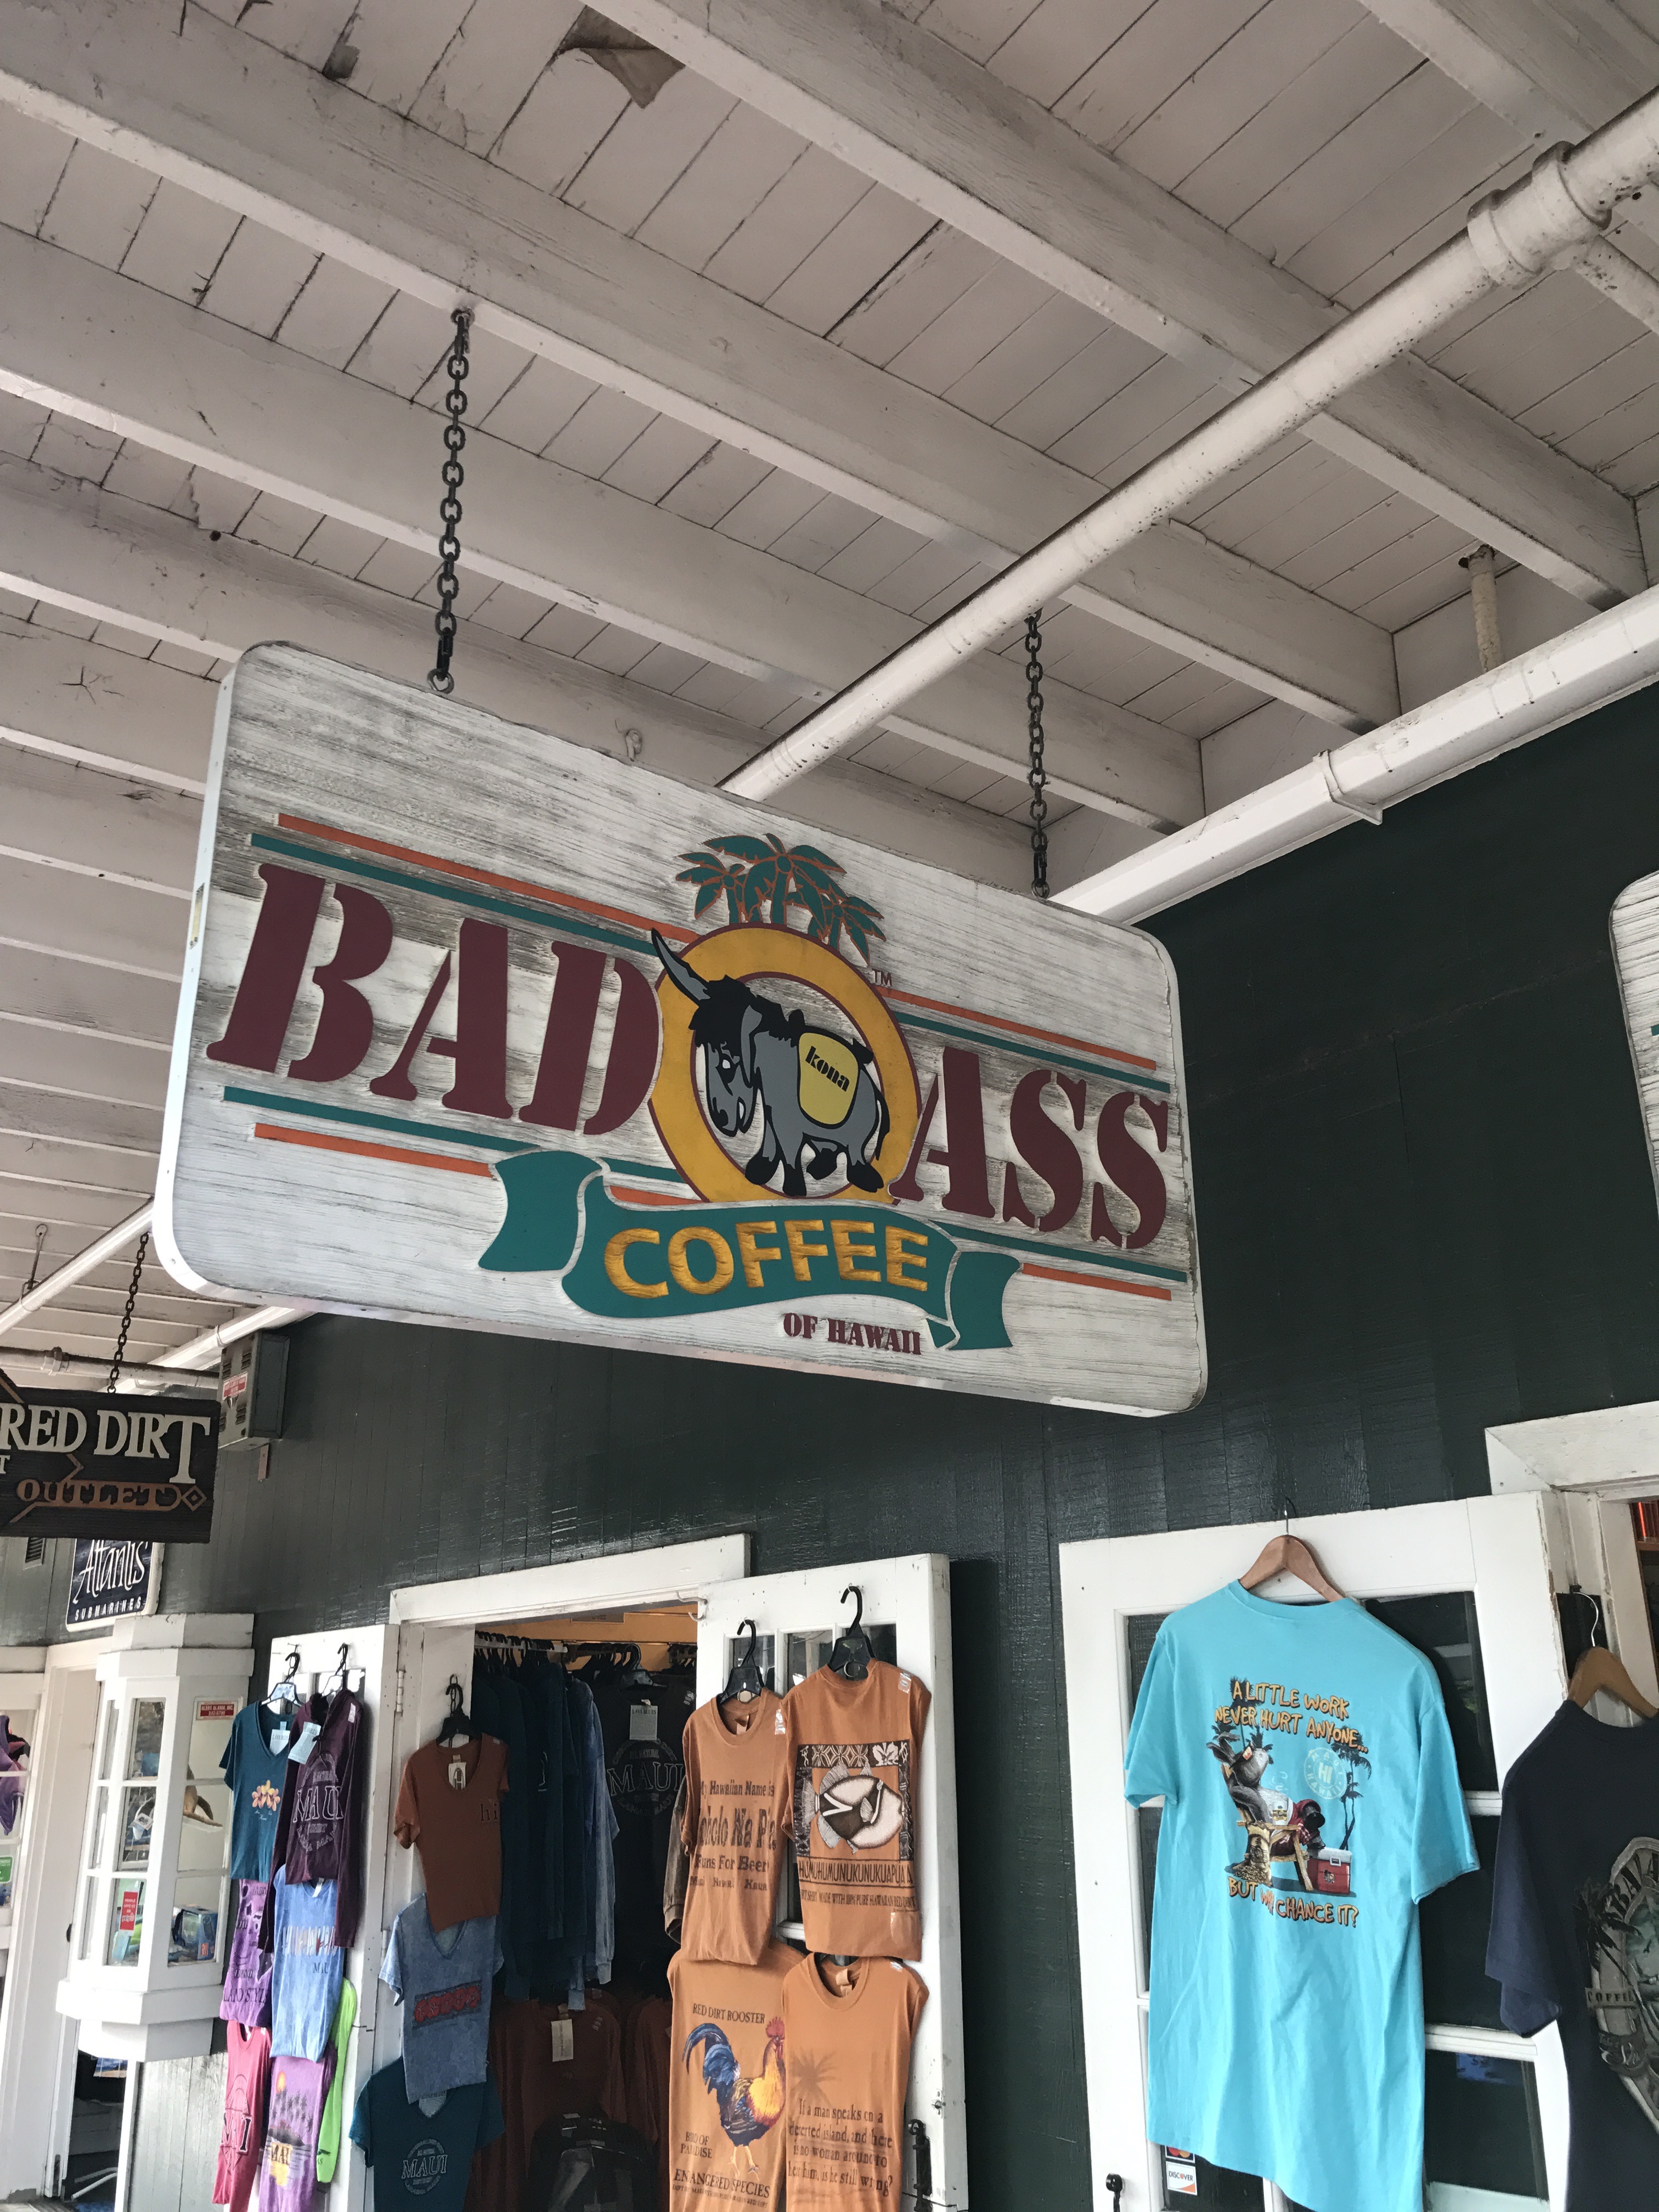 Bad Ass Coffee - Lahaina, Maui - 5 Must Visit Coffee Shops On Maui - Maui Itinerary - Hawaii Coffee - What To Do On Maui - Hawaii Travel Tips - Communikait by Kait Hanson